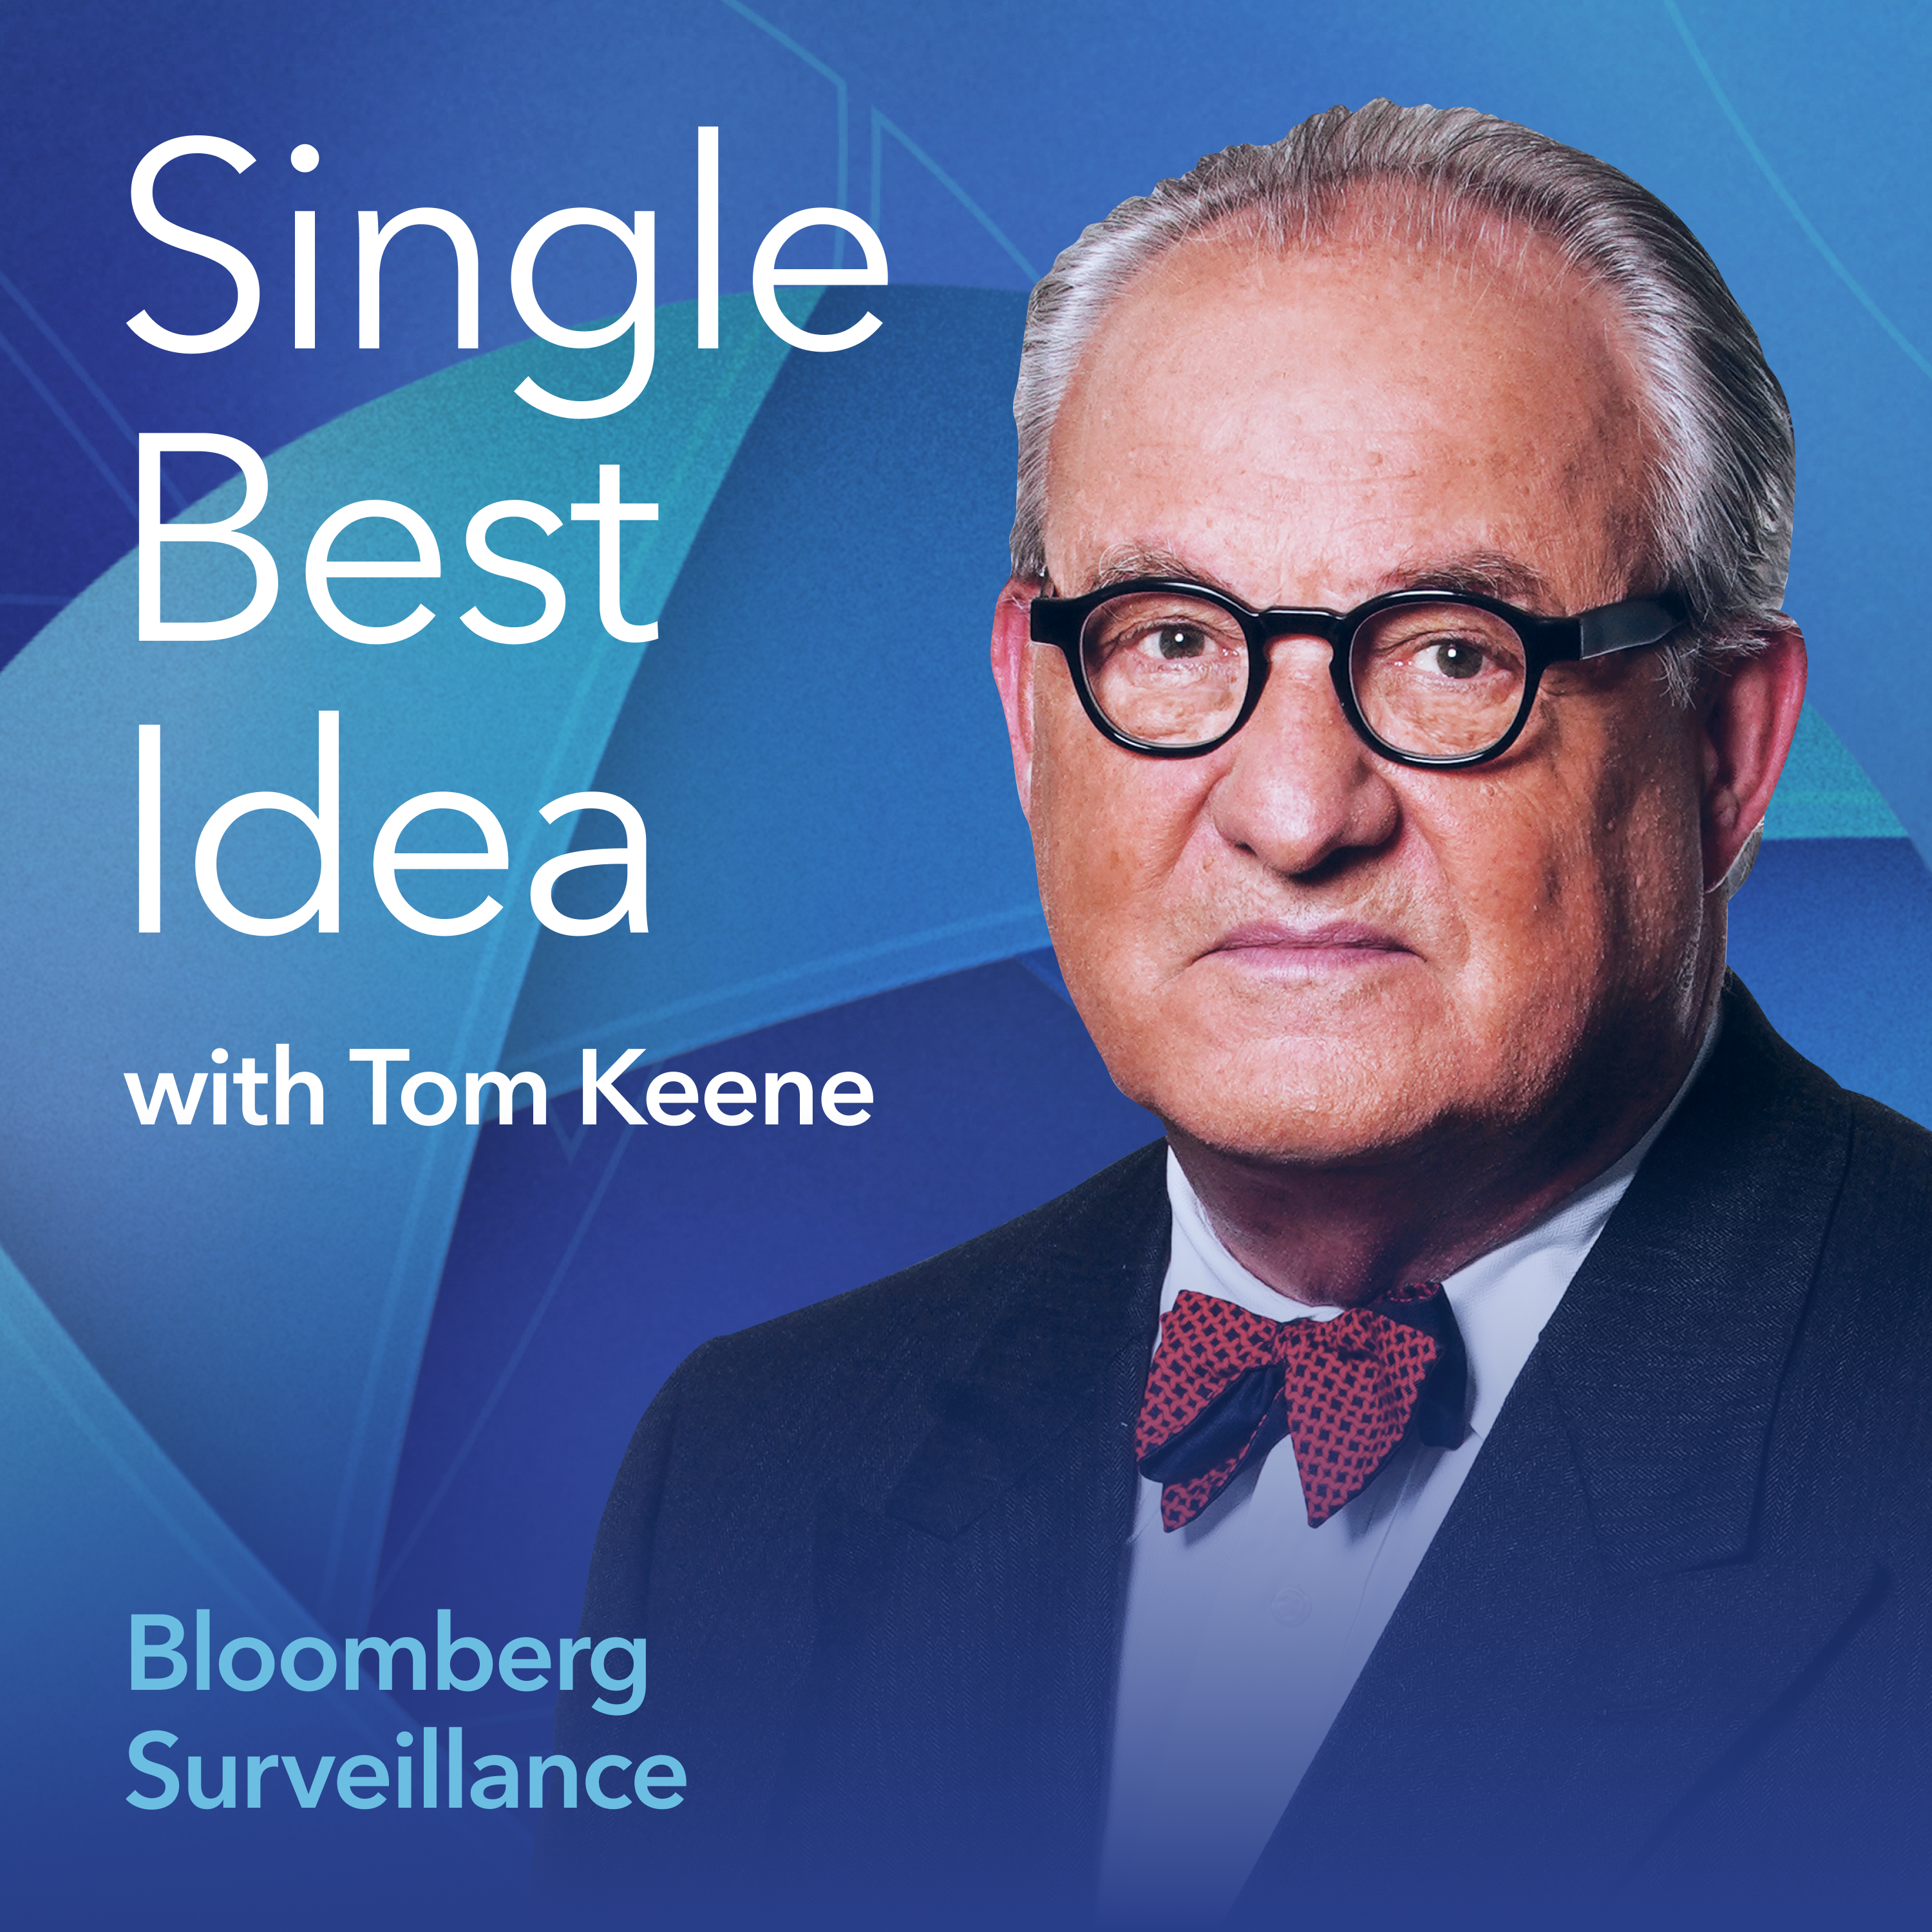 Single Best Idea with Tom Keene: Sri Kumar and Gene Munster